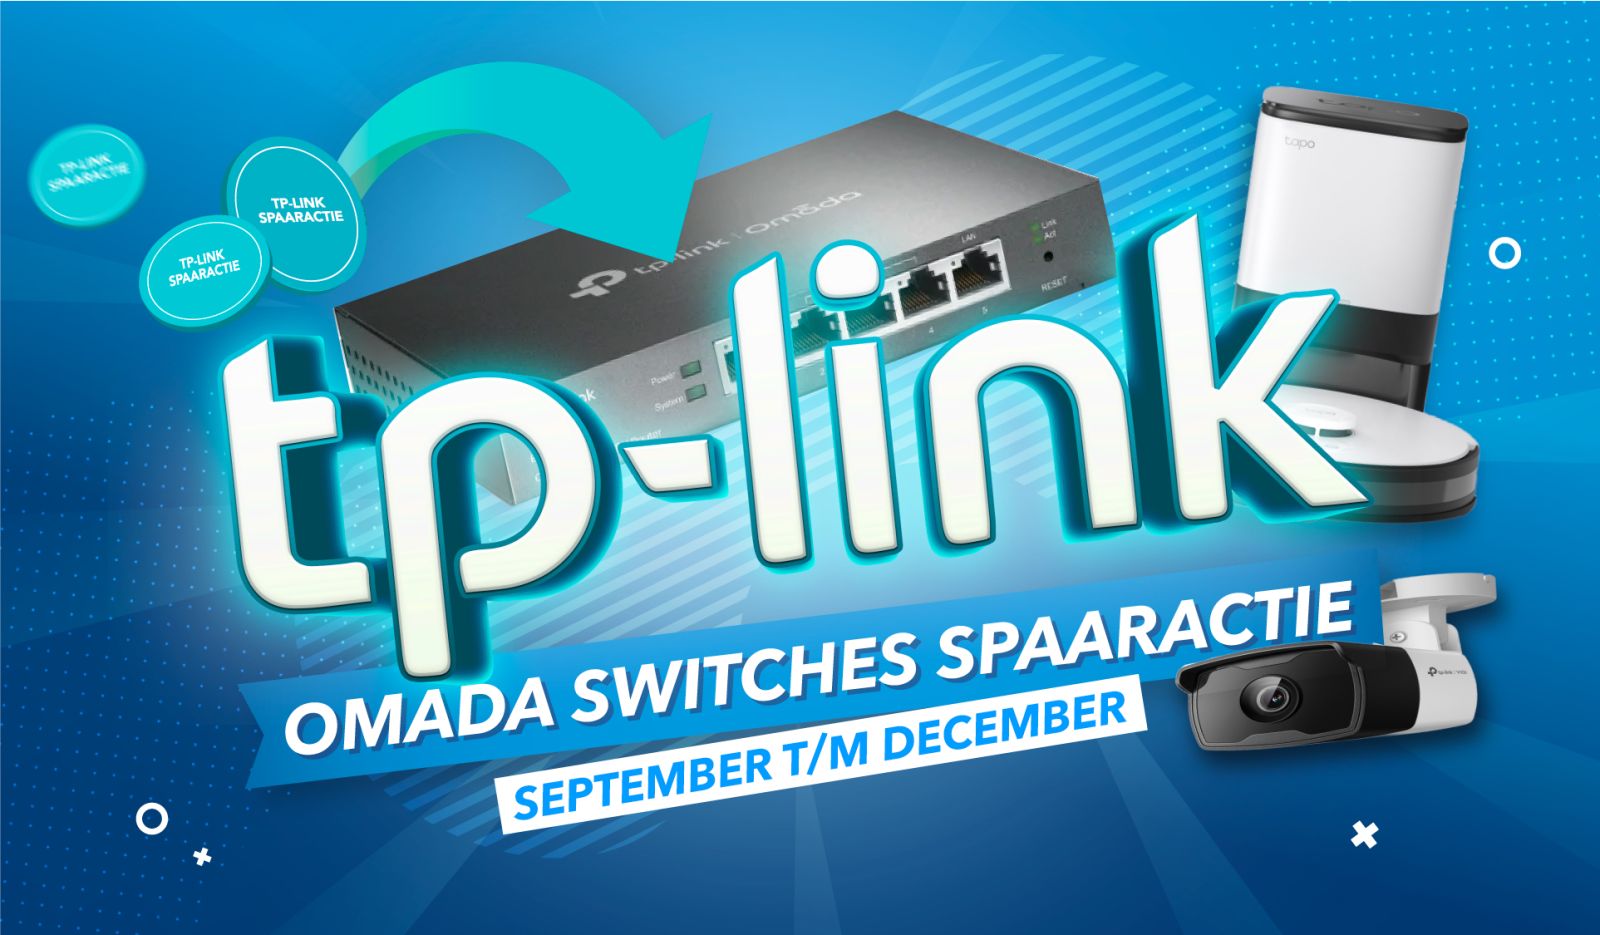 TP-Link Omada Switches Spaaractie 